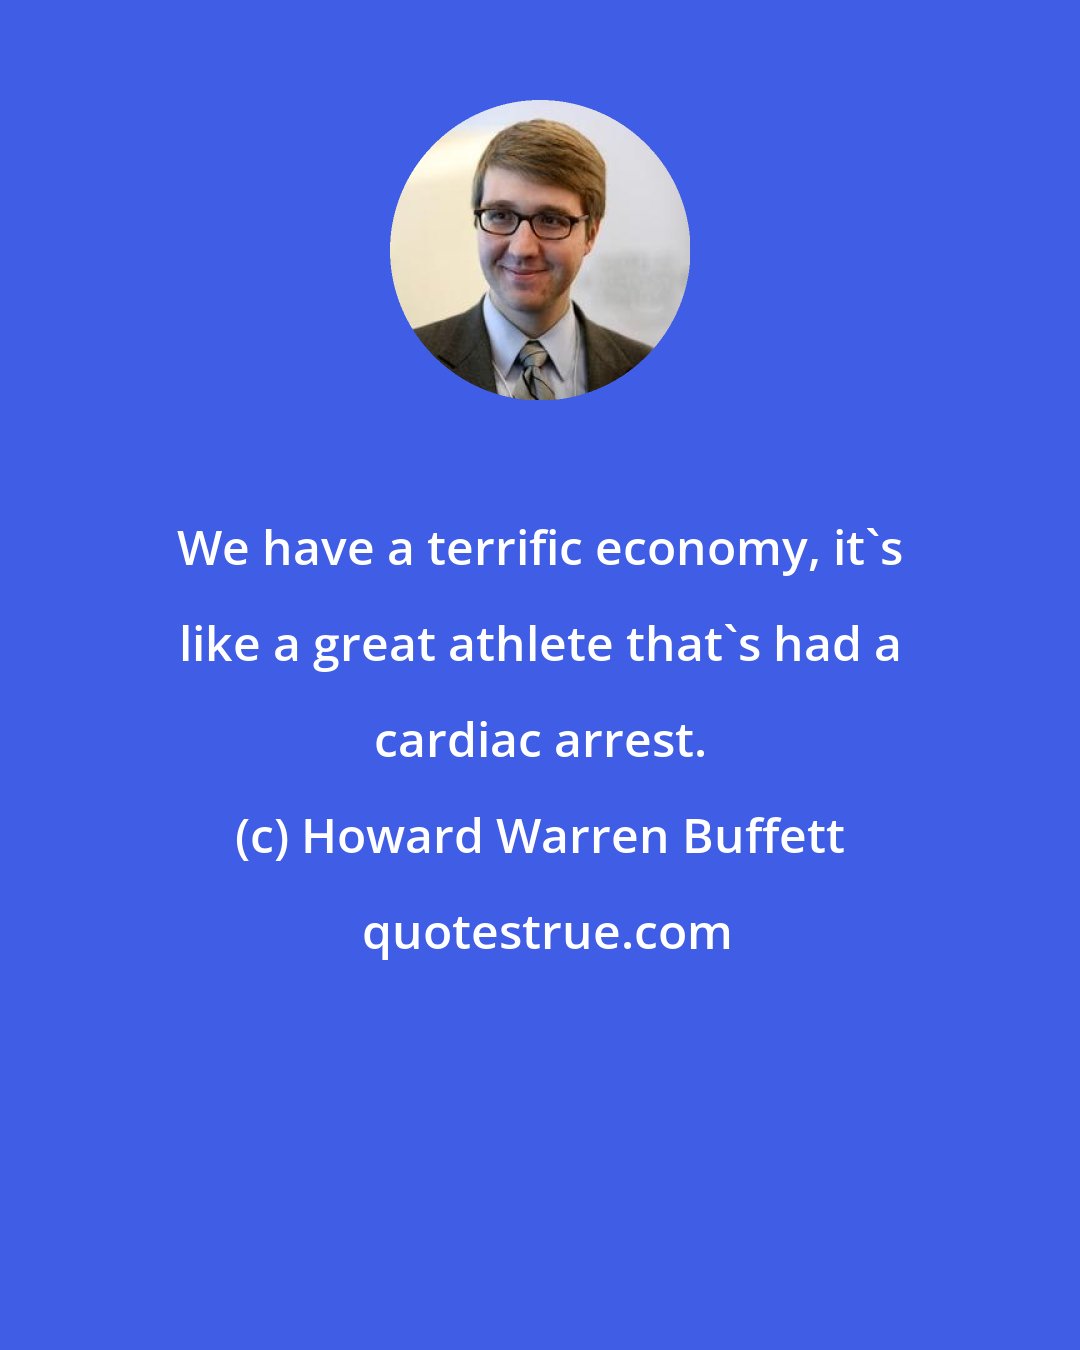 Howard Warren Buffett: We have a terrific economy, it's like a great athlete that's had a cardiac arrest.